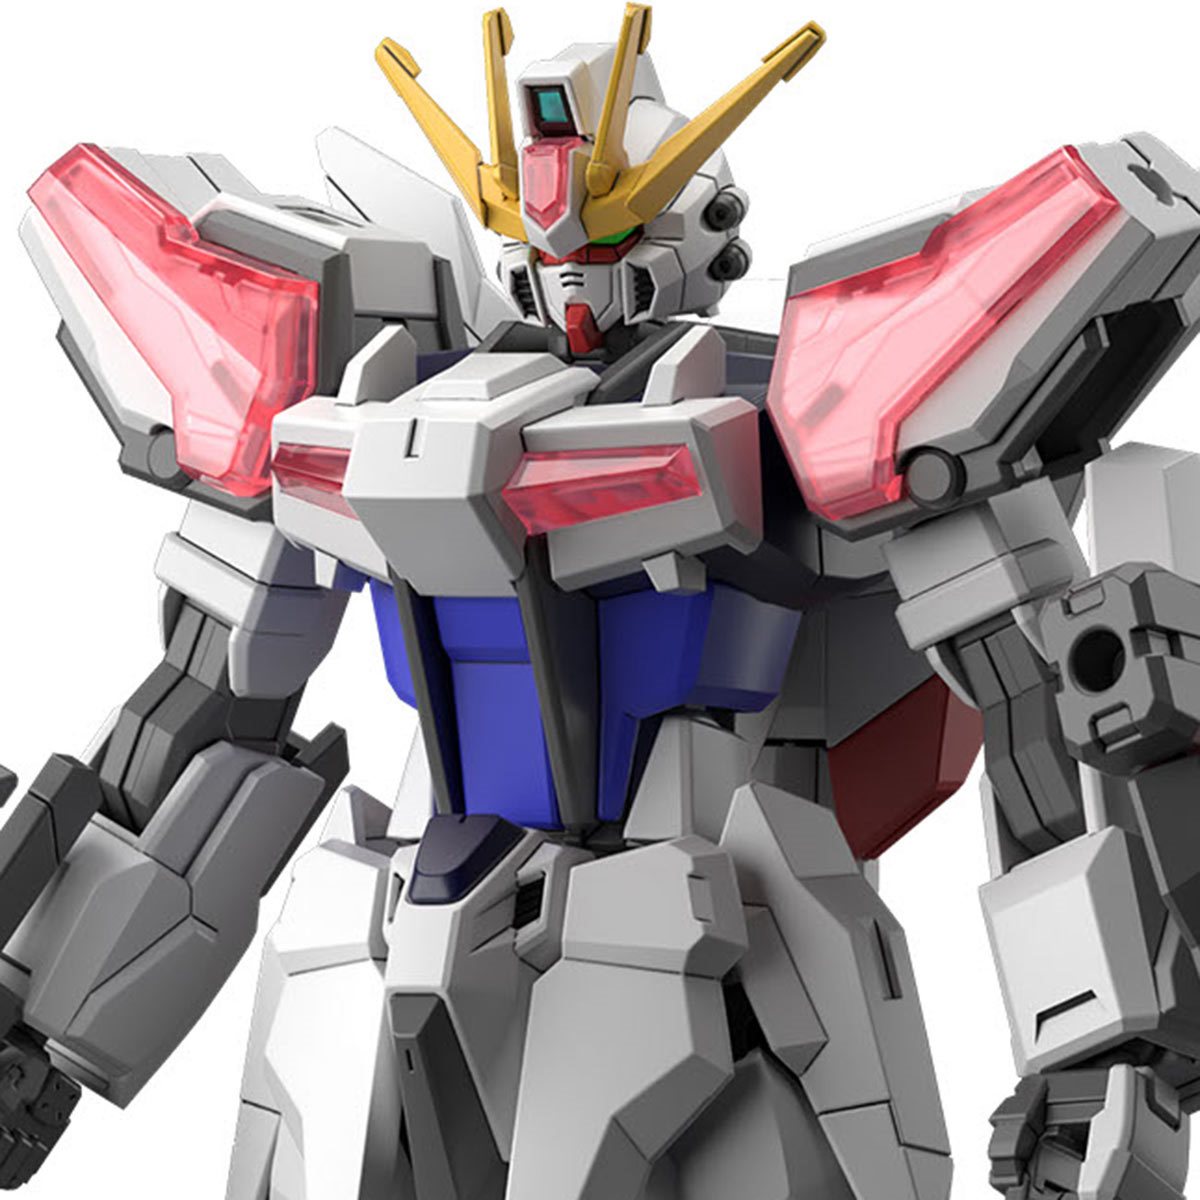 Bandai Hobby MG Build Strike Gundam Full Package Model Kit (1/100